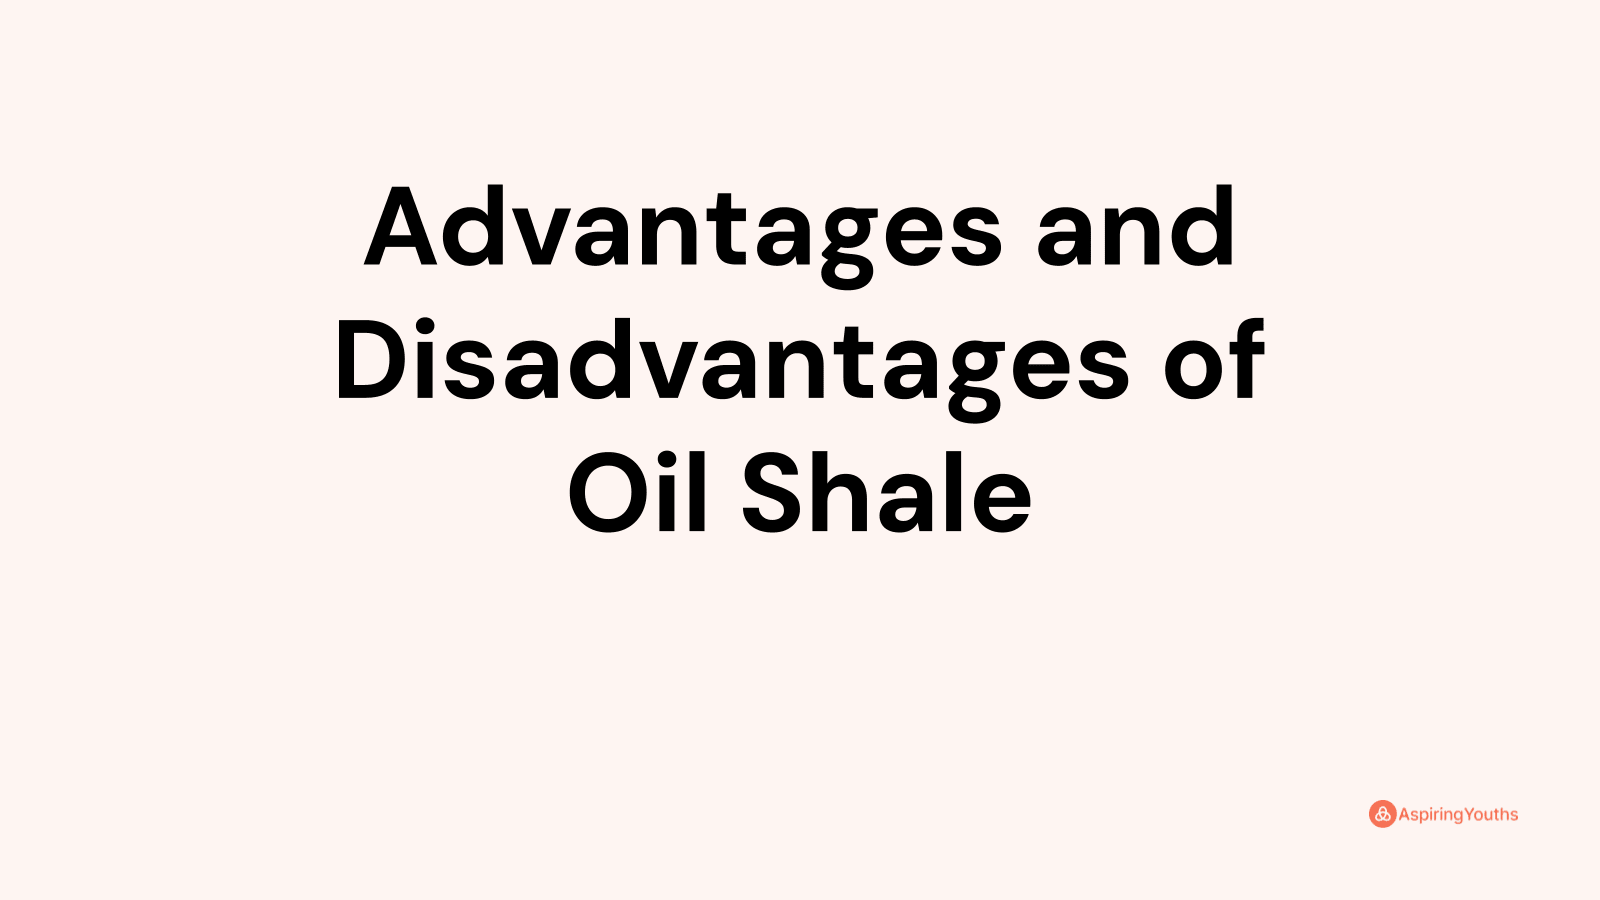 Advantages and disadvantages of Oil Shale